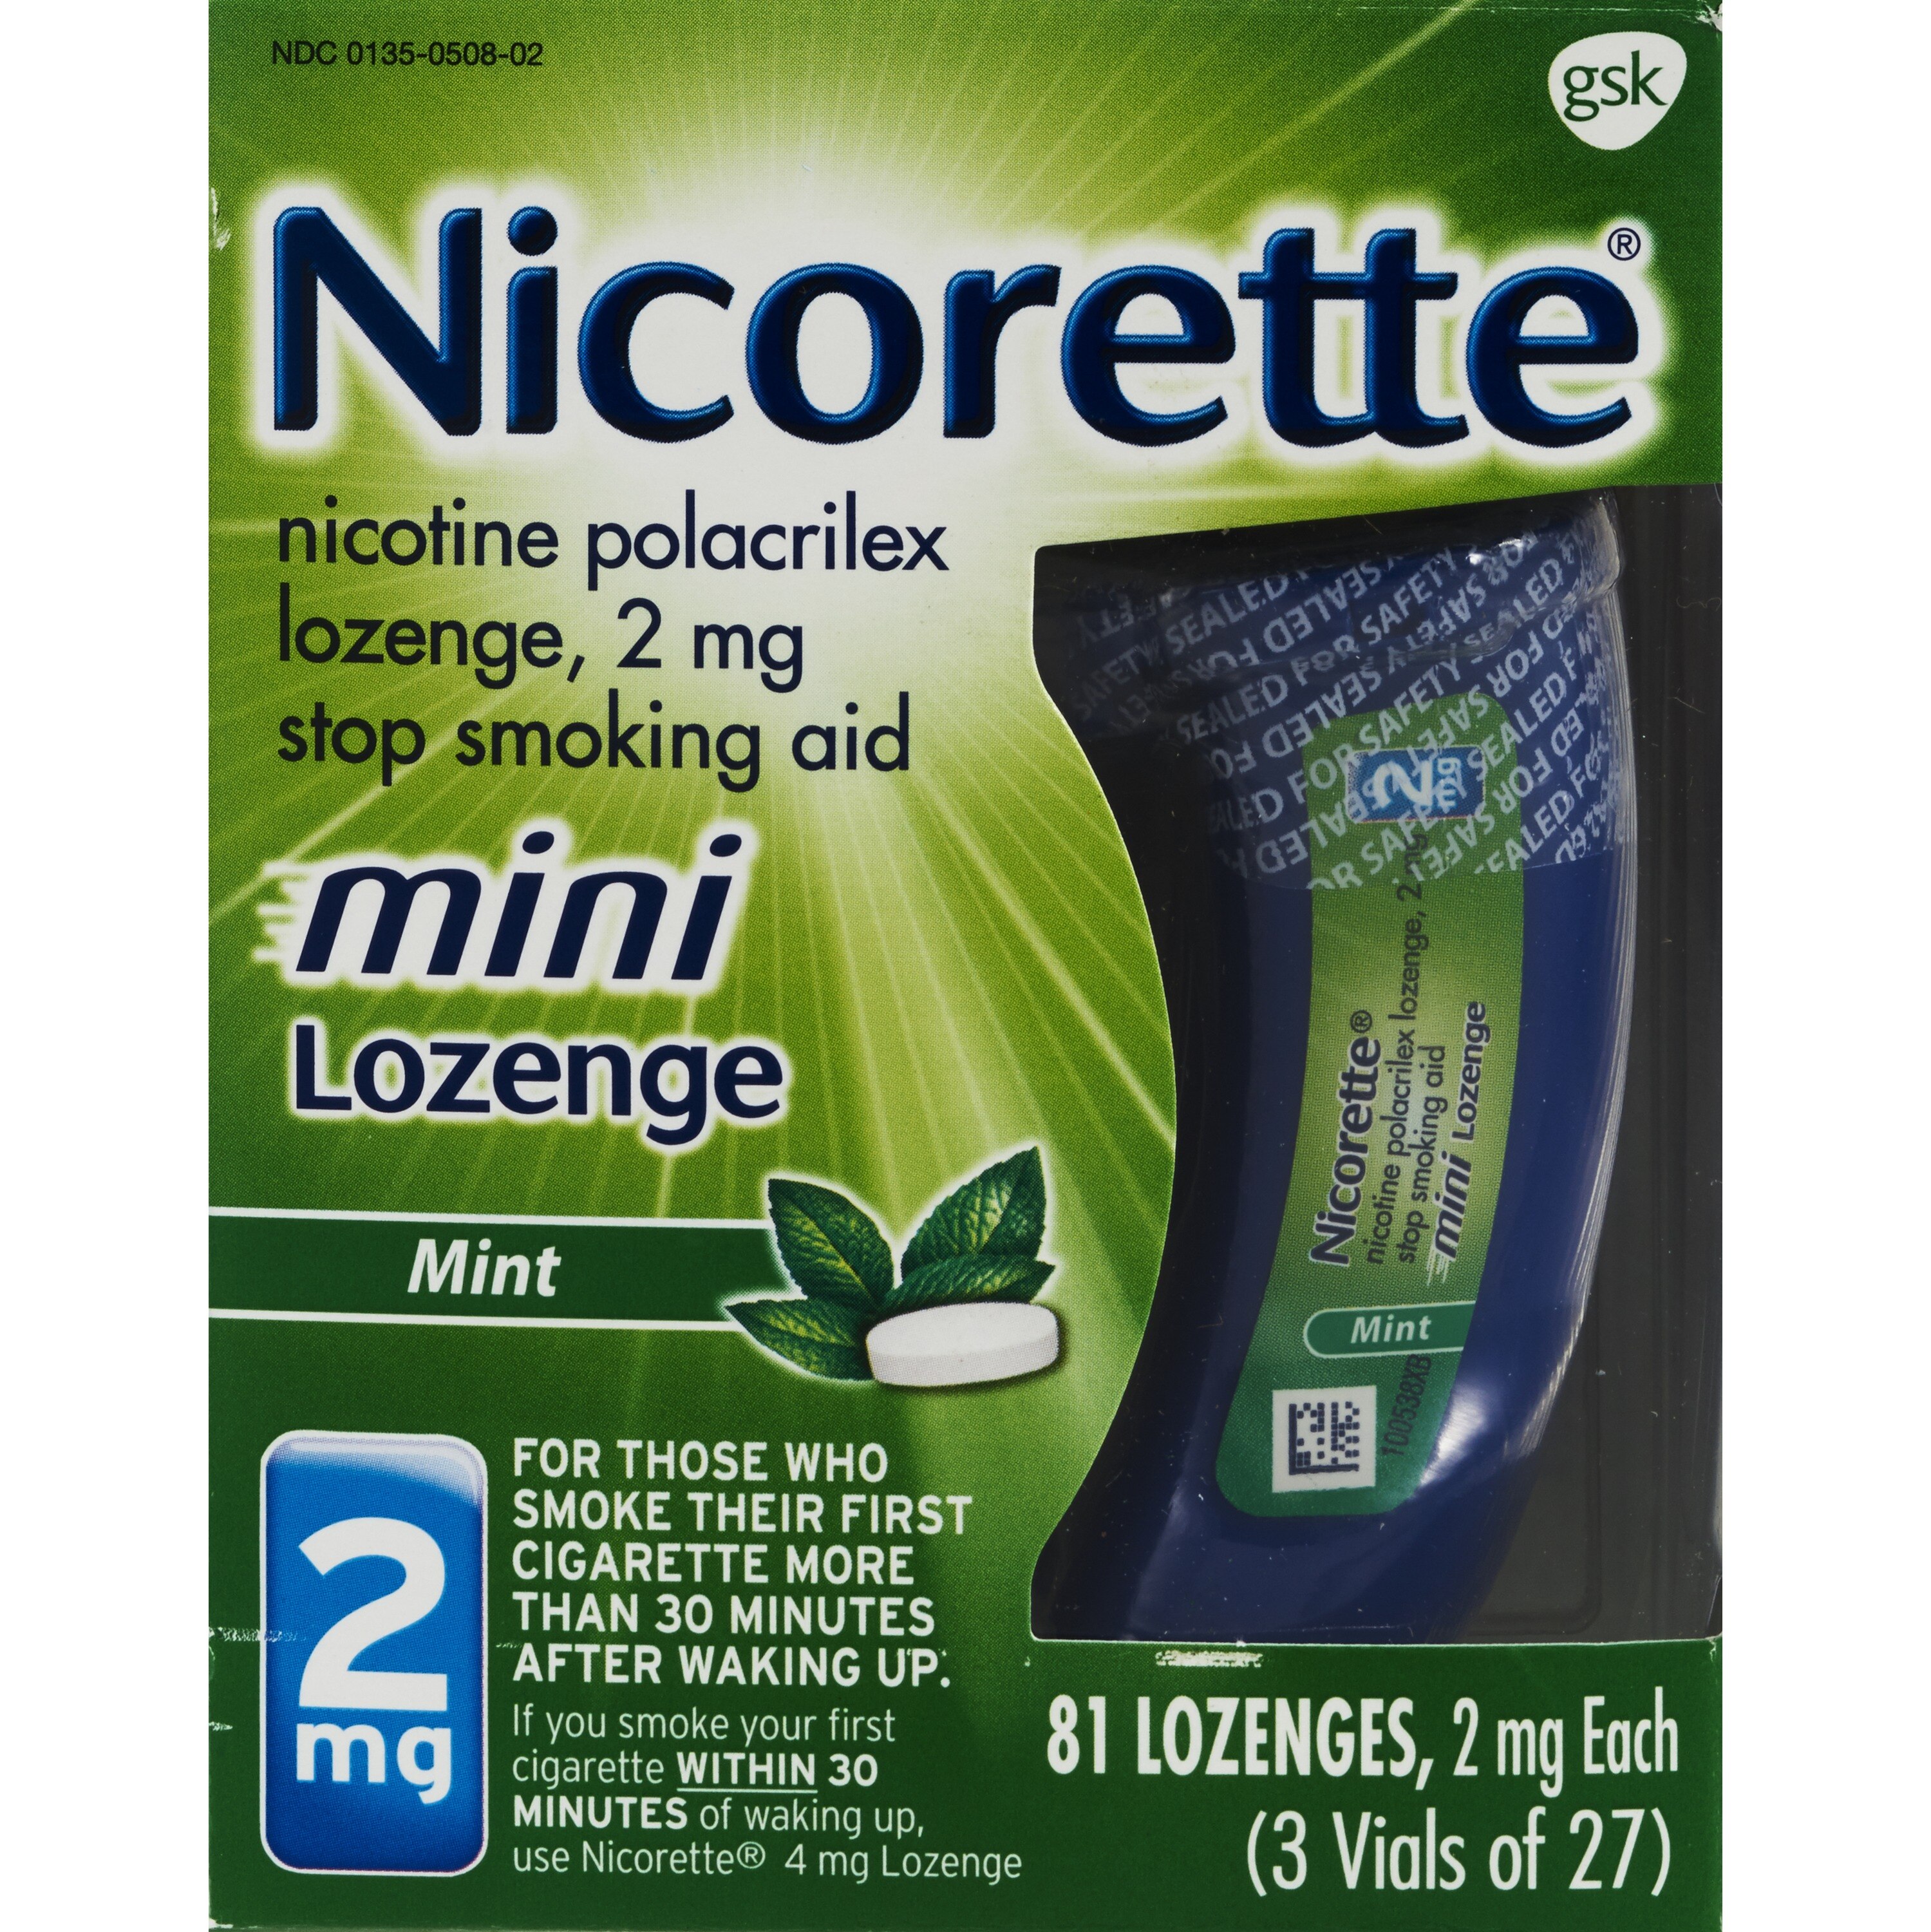 Nicorette Mini Nicotine Lozenges to Stop Smoking, 2mg, Mint Flavor - 81 Count